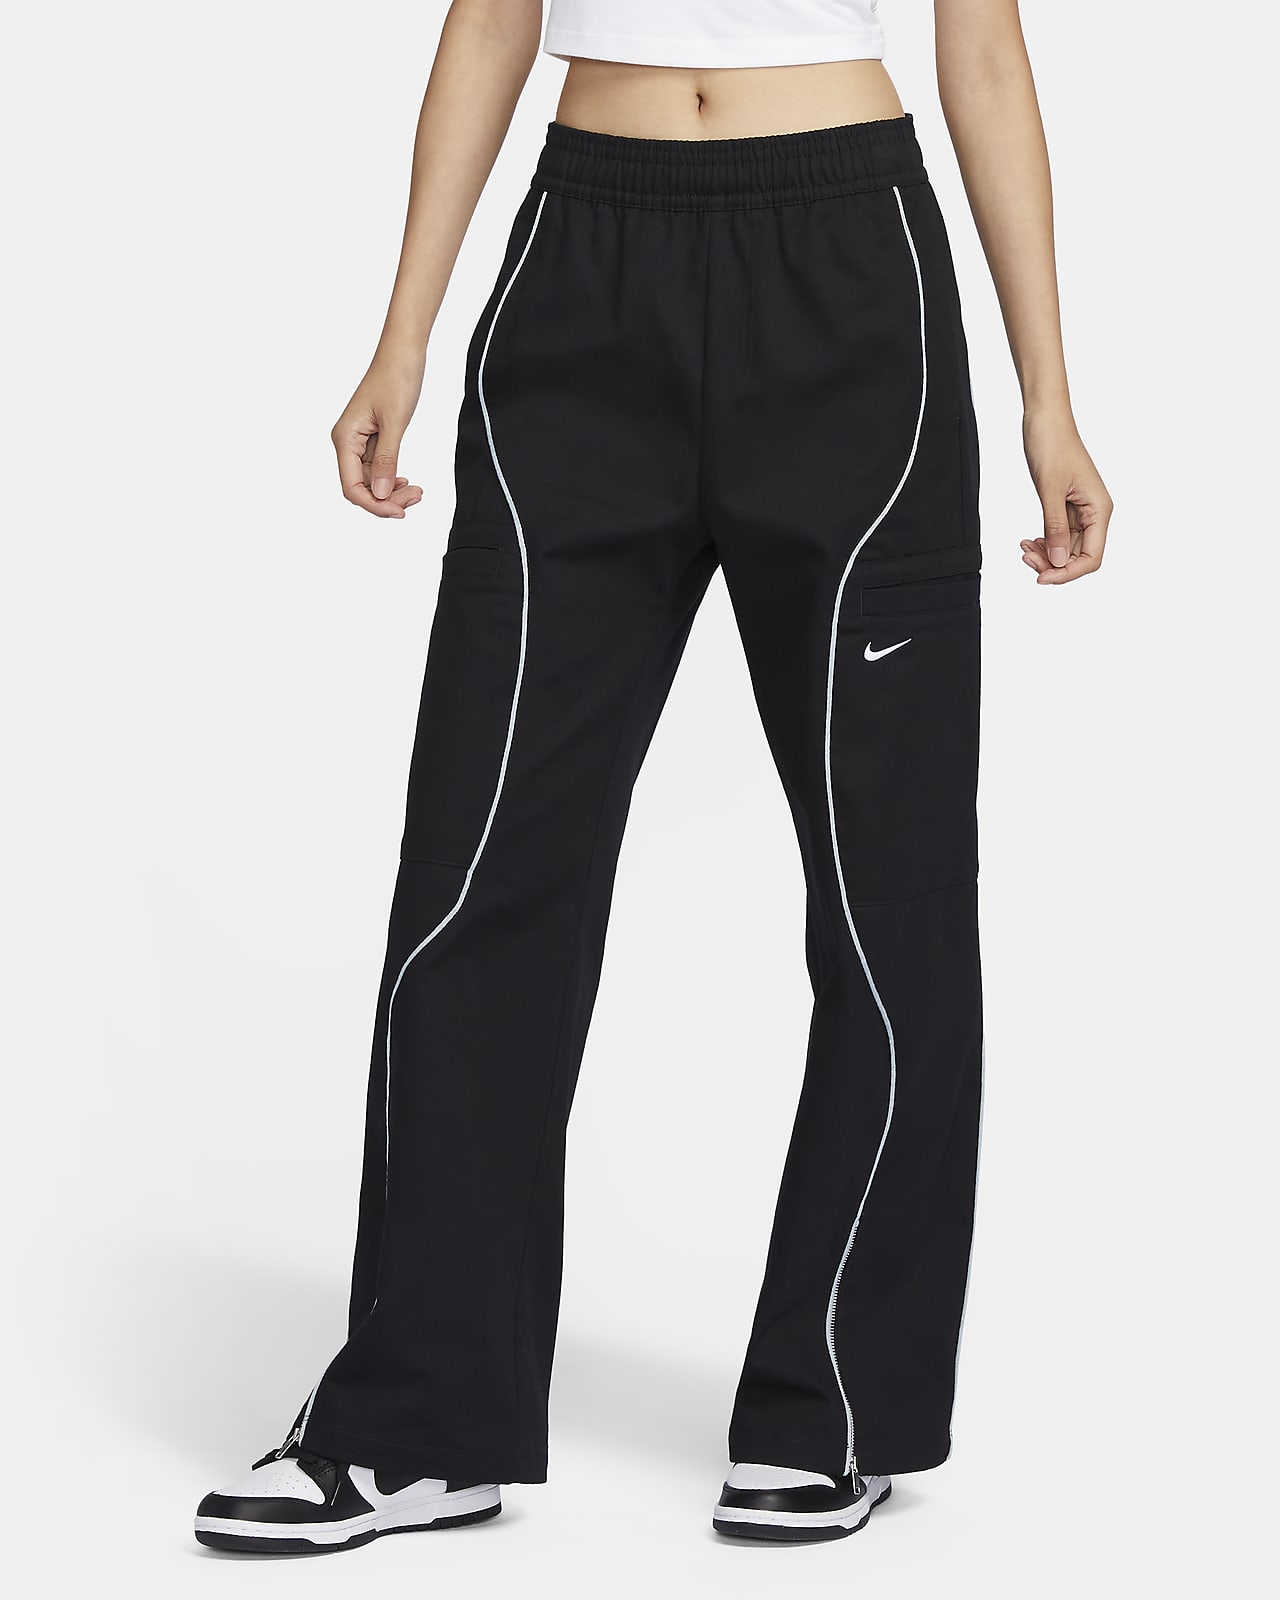 Nike Sportswear Women's High-Waisted Woven Pants